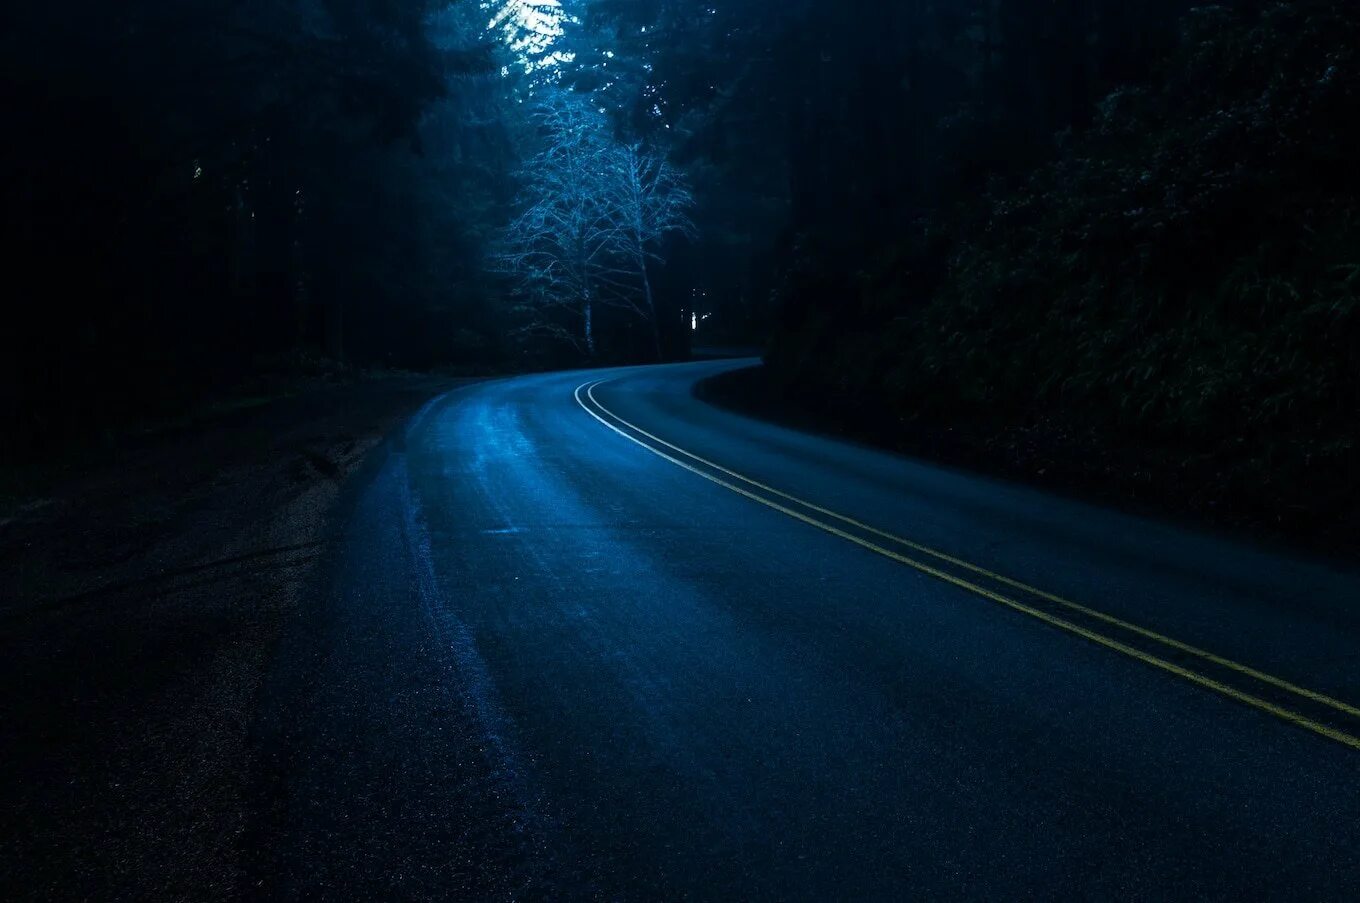 Night cause. Темная дорога. Дорога ночью. Лесная дорога ночью. Ночная трасса в лесу.